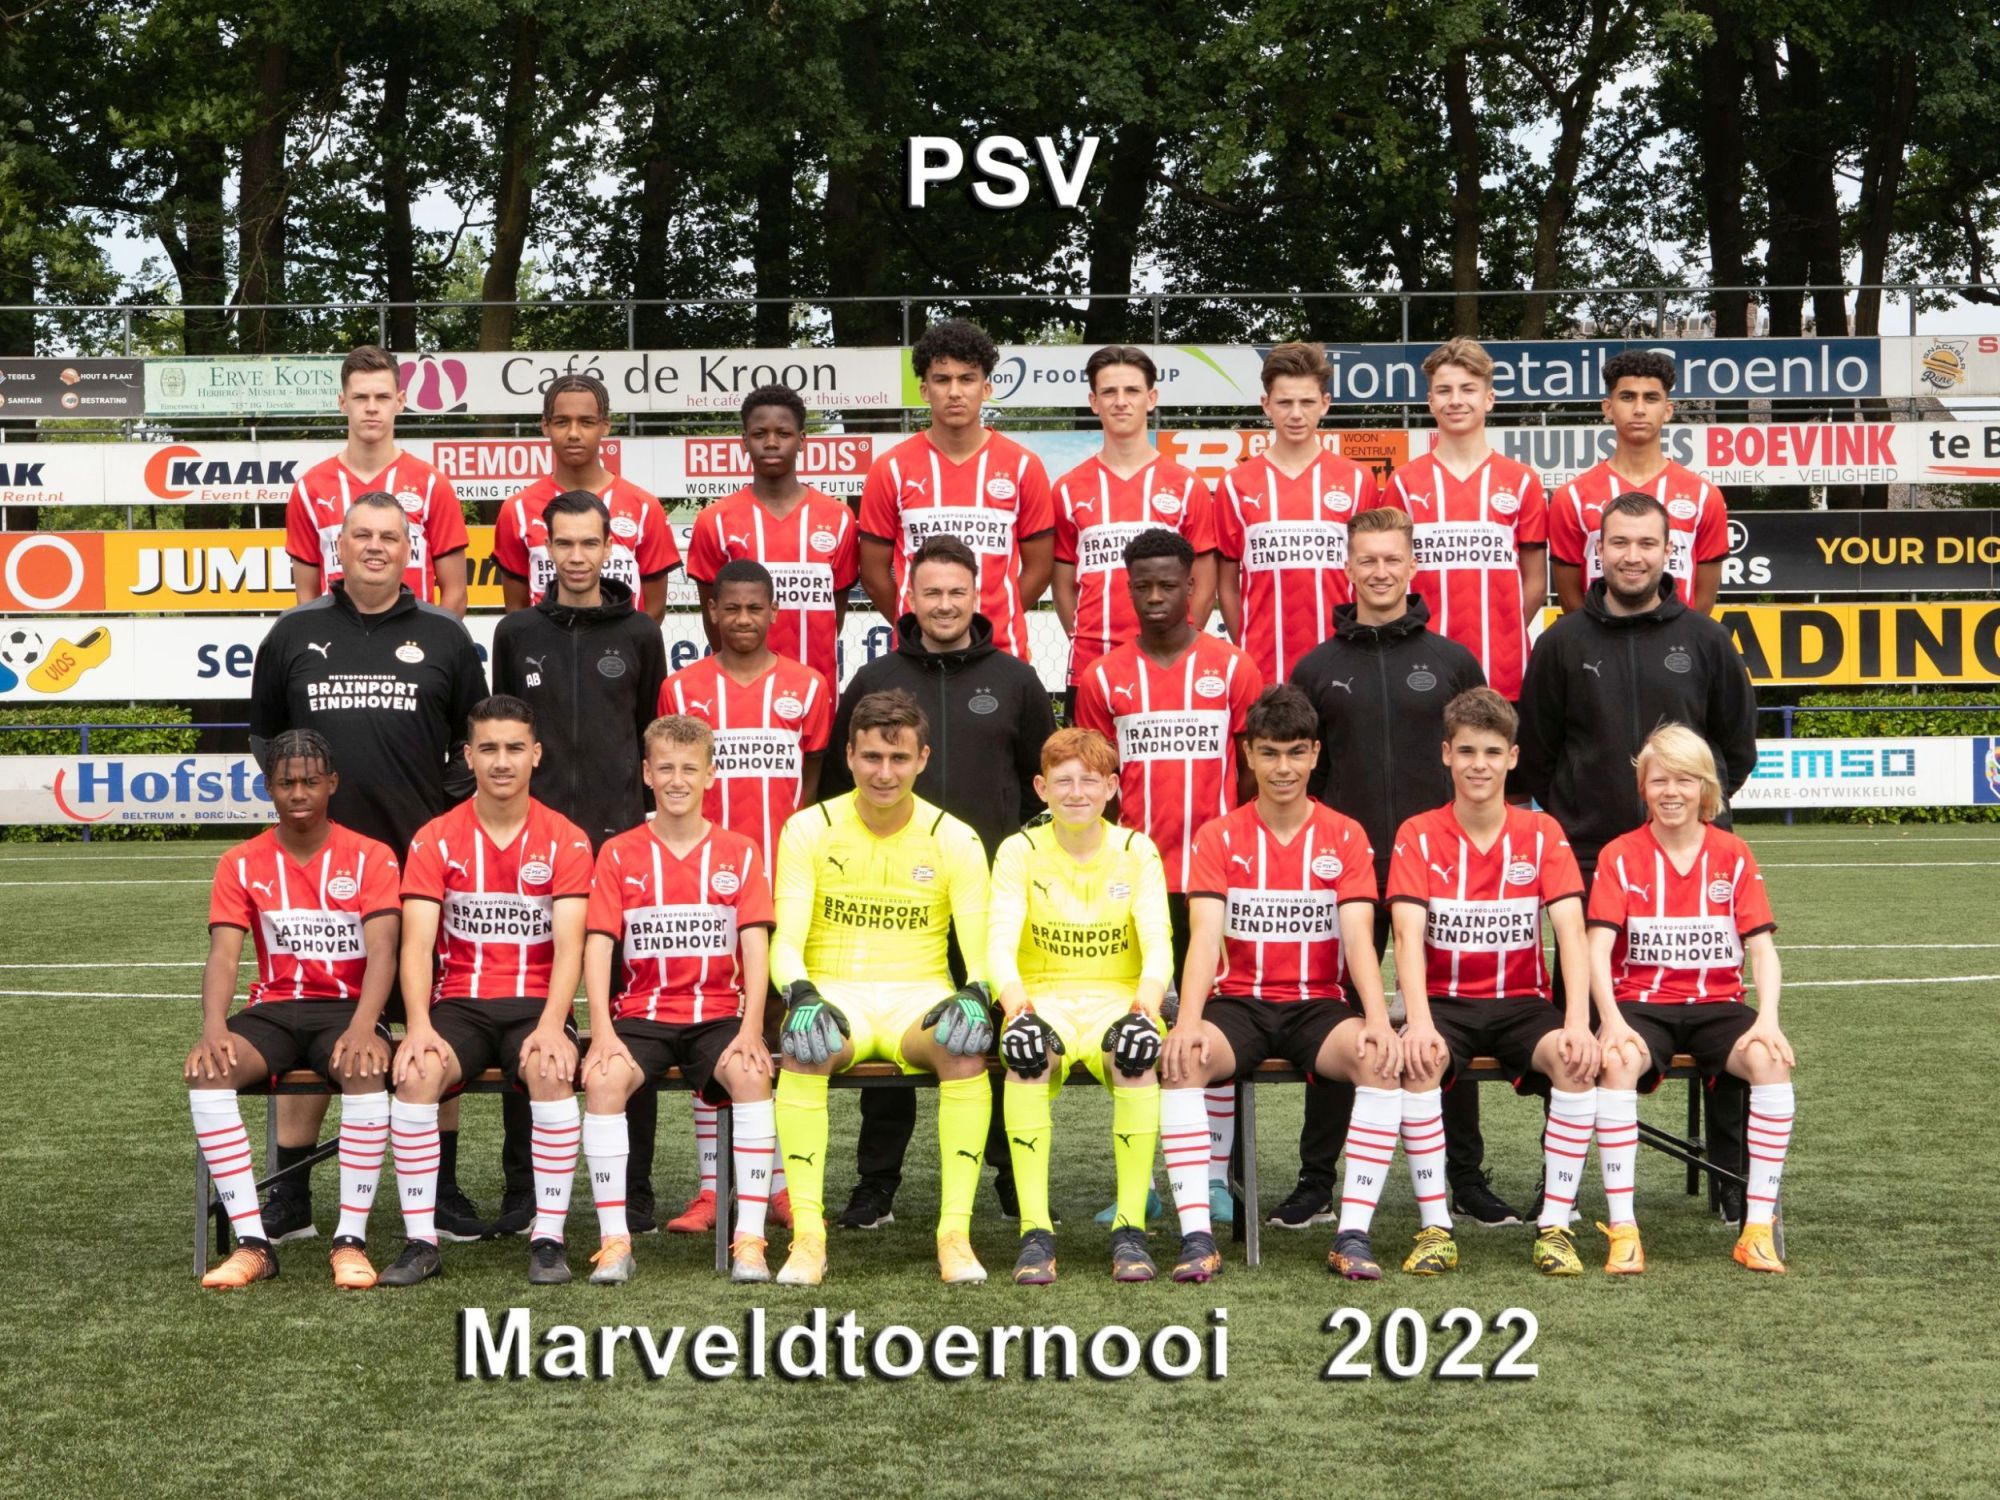 Marveld Tournament 2022 - Team PSV